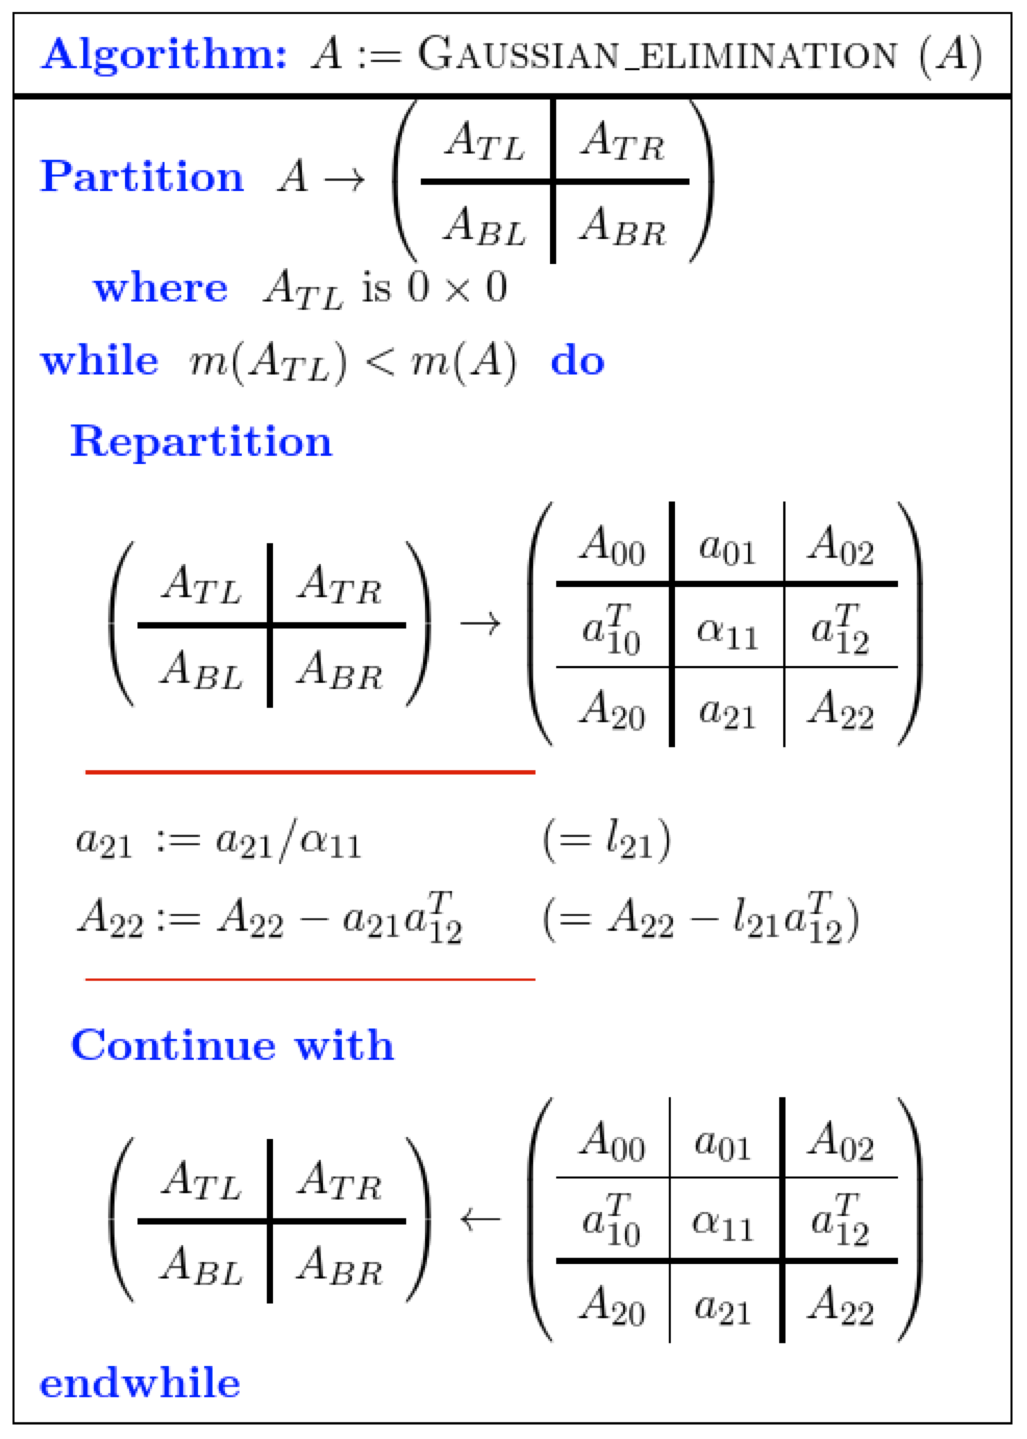 Gaussian elimination algorithm